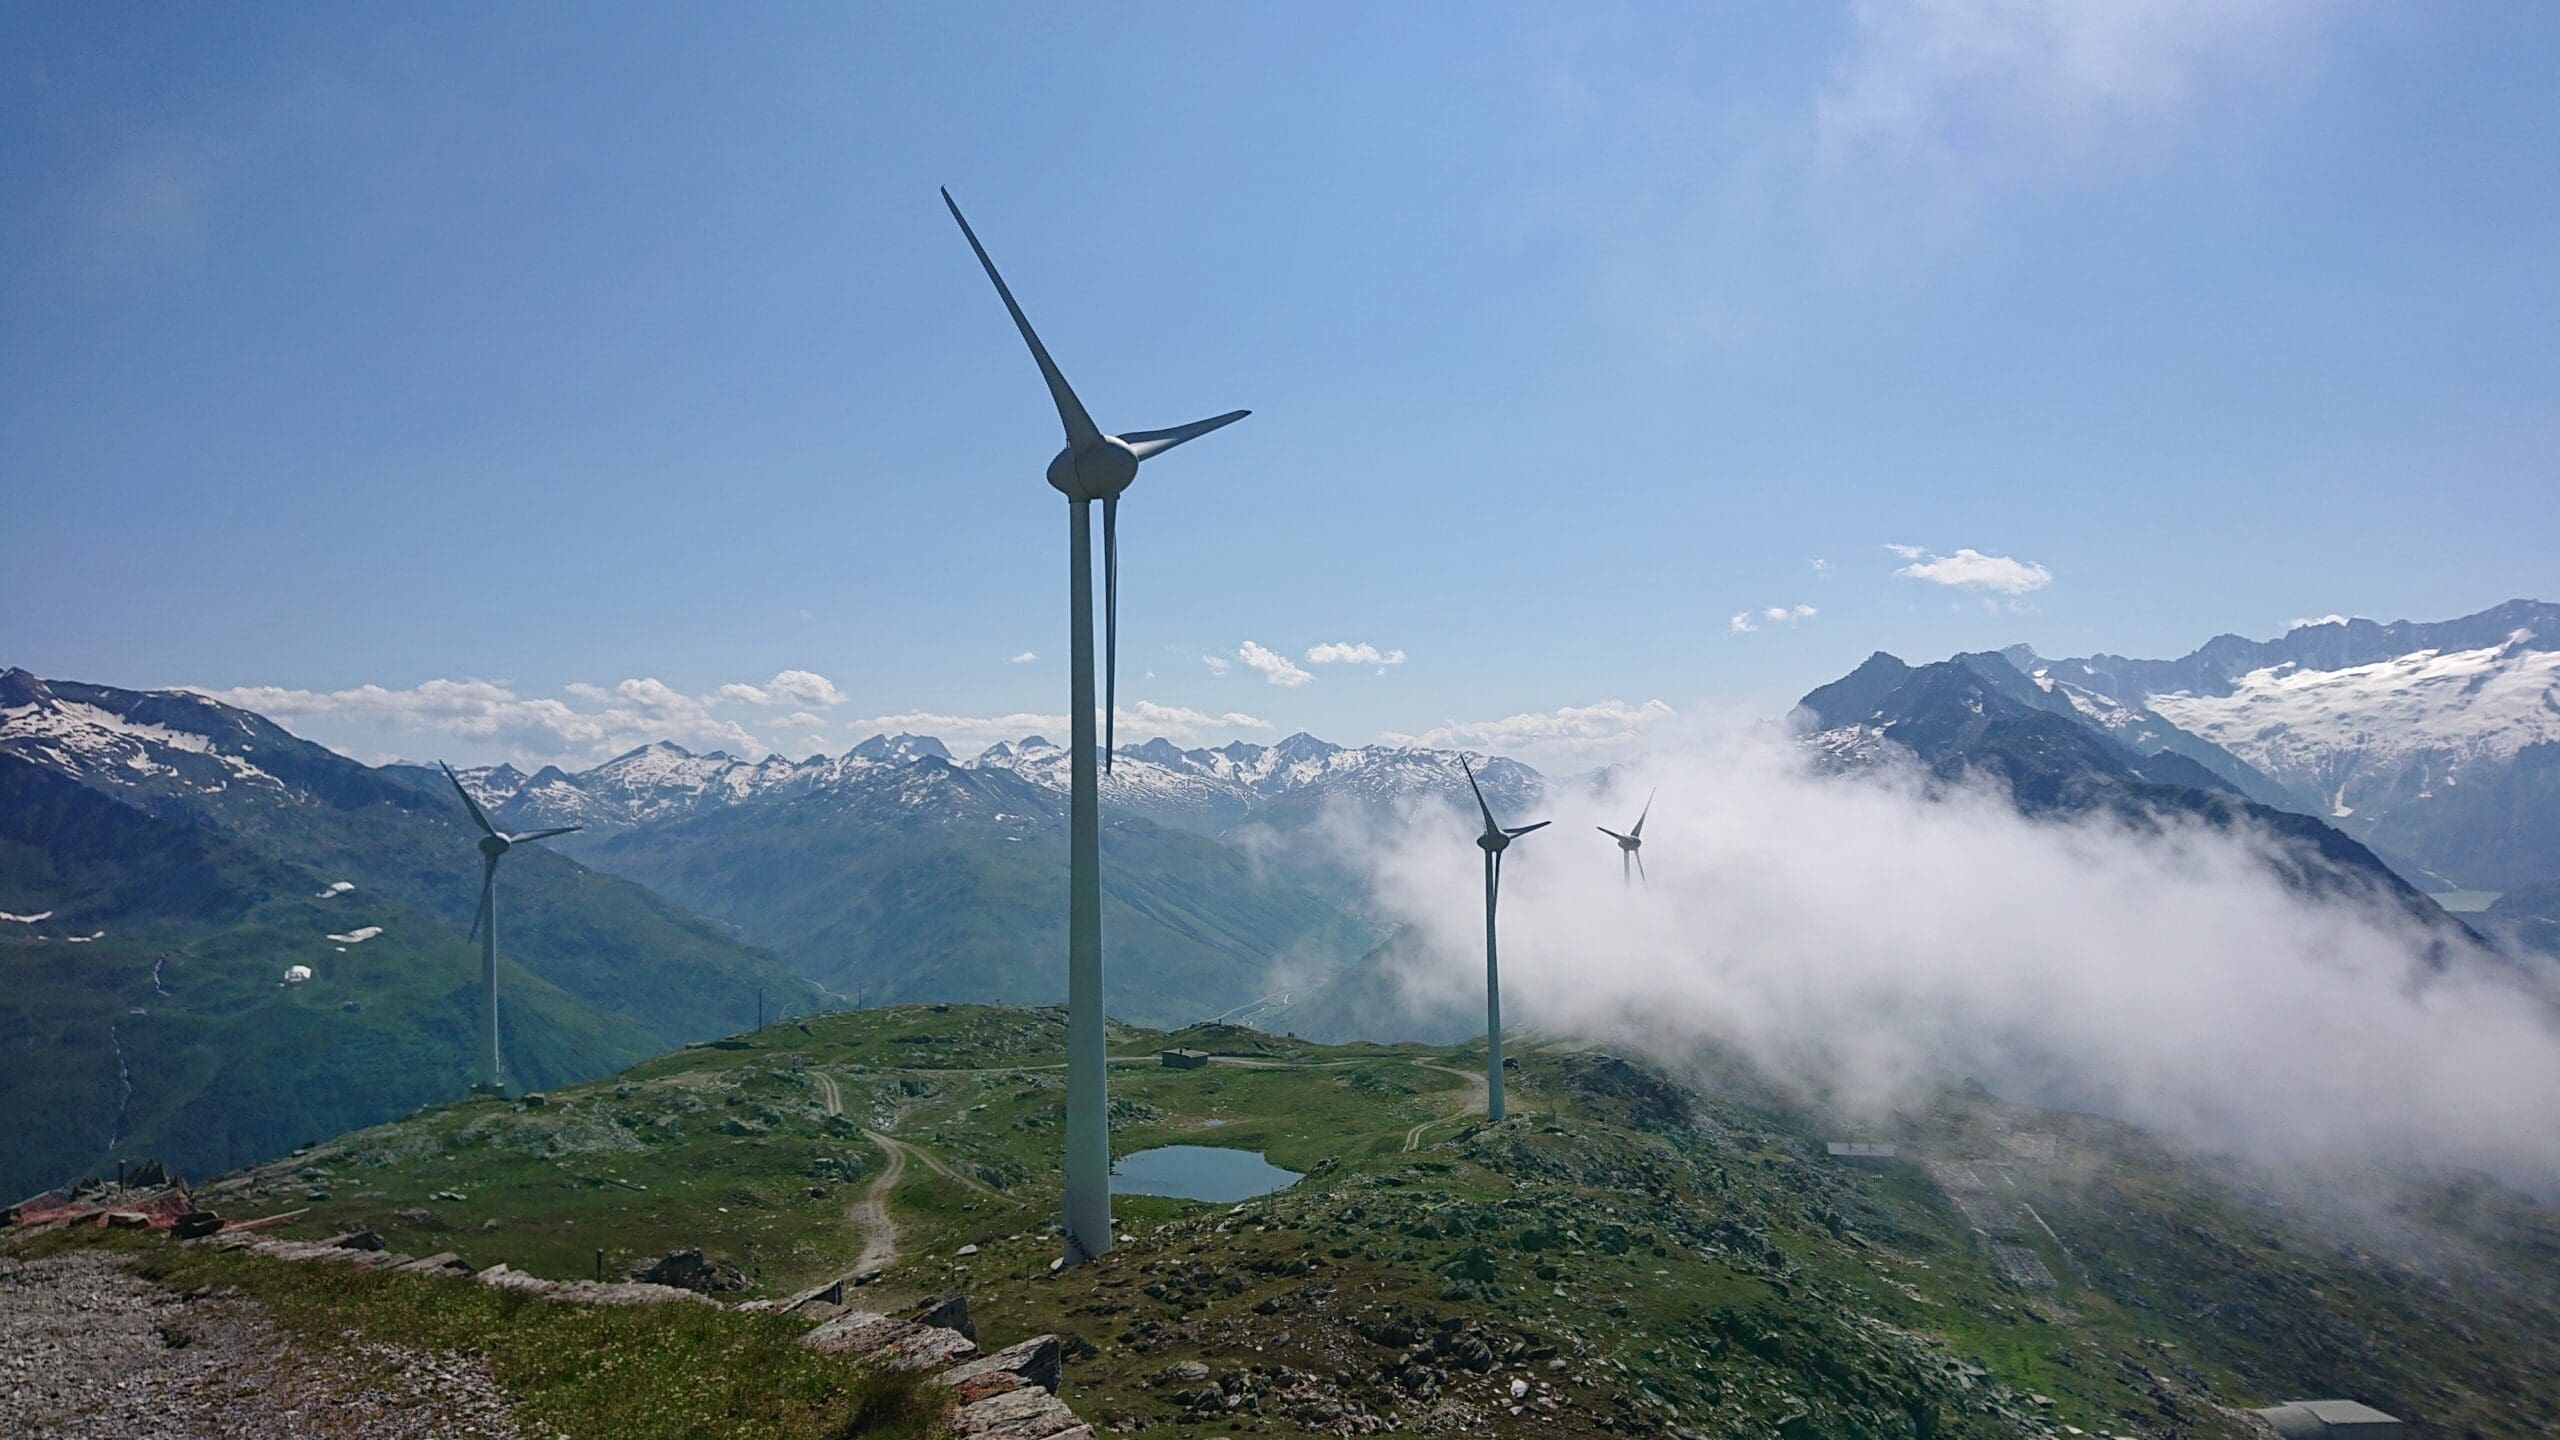 Windpark Gütsch, Andermatt, Switzerland. 20.07.21. By Desmond McCormackImage